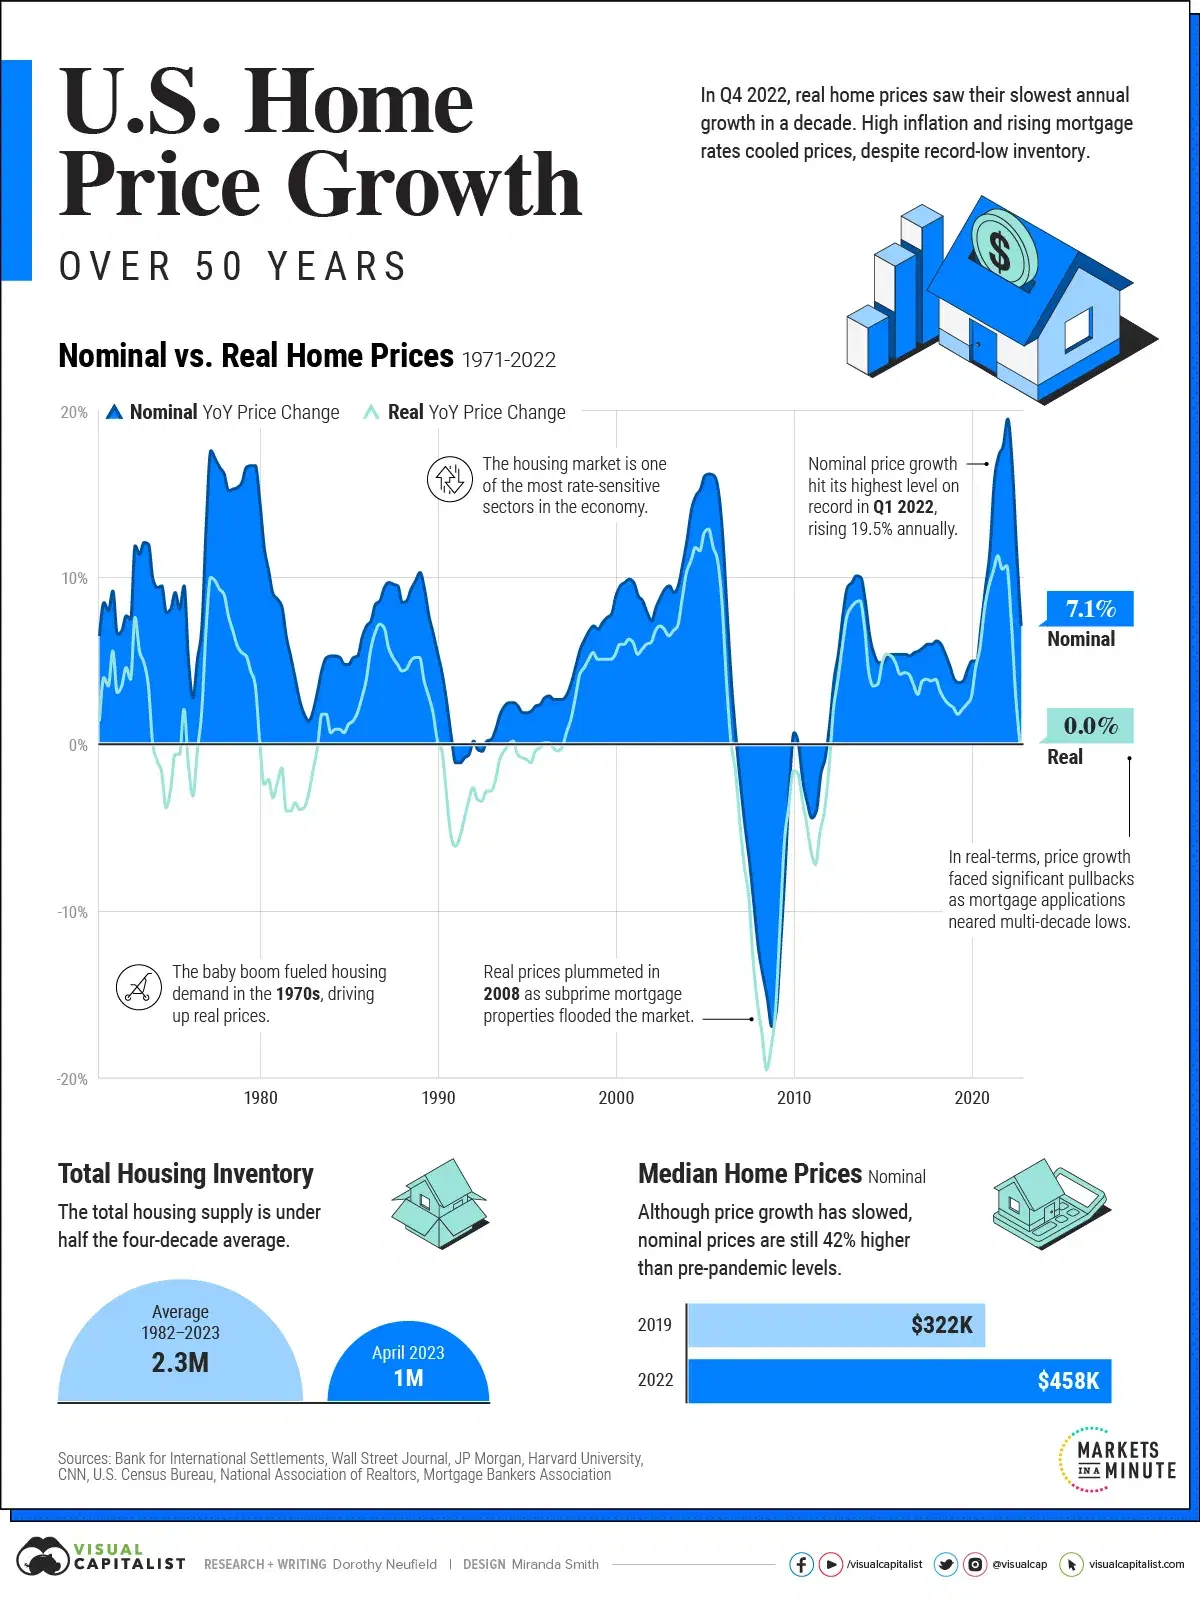 U.S. Home Price Growth Over 50 Years